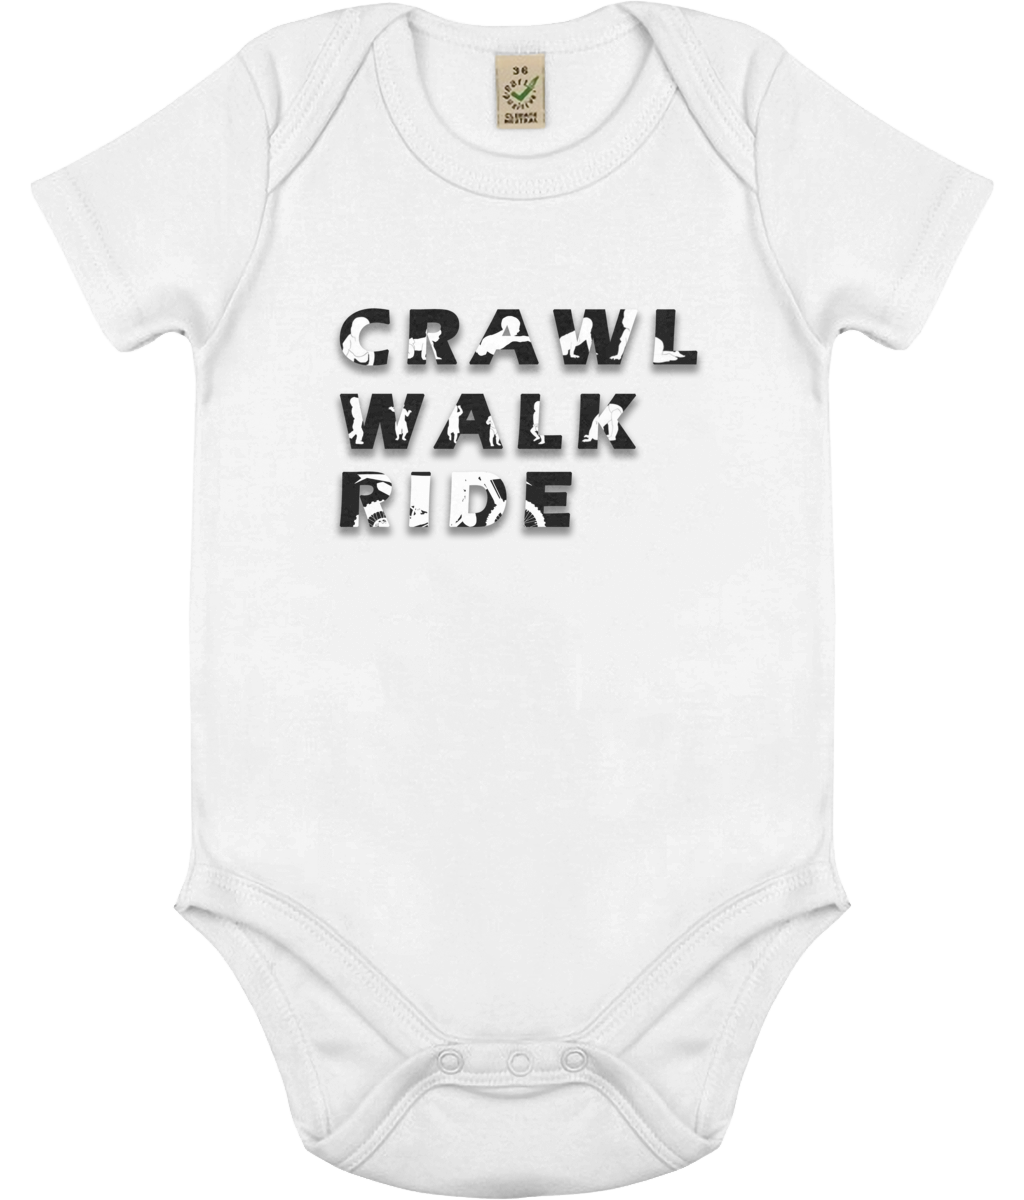 Crawl Walk Ride - Baby Grow 100% Cotton